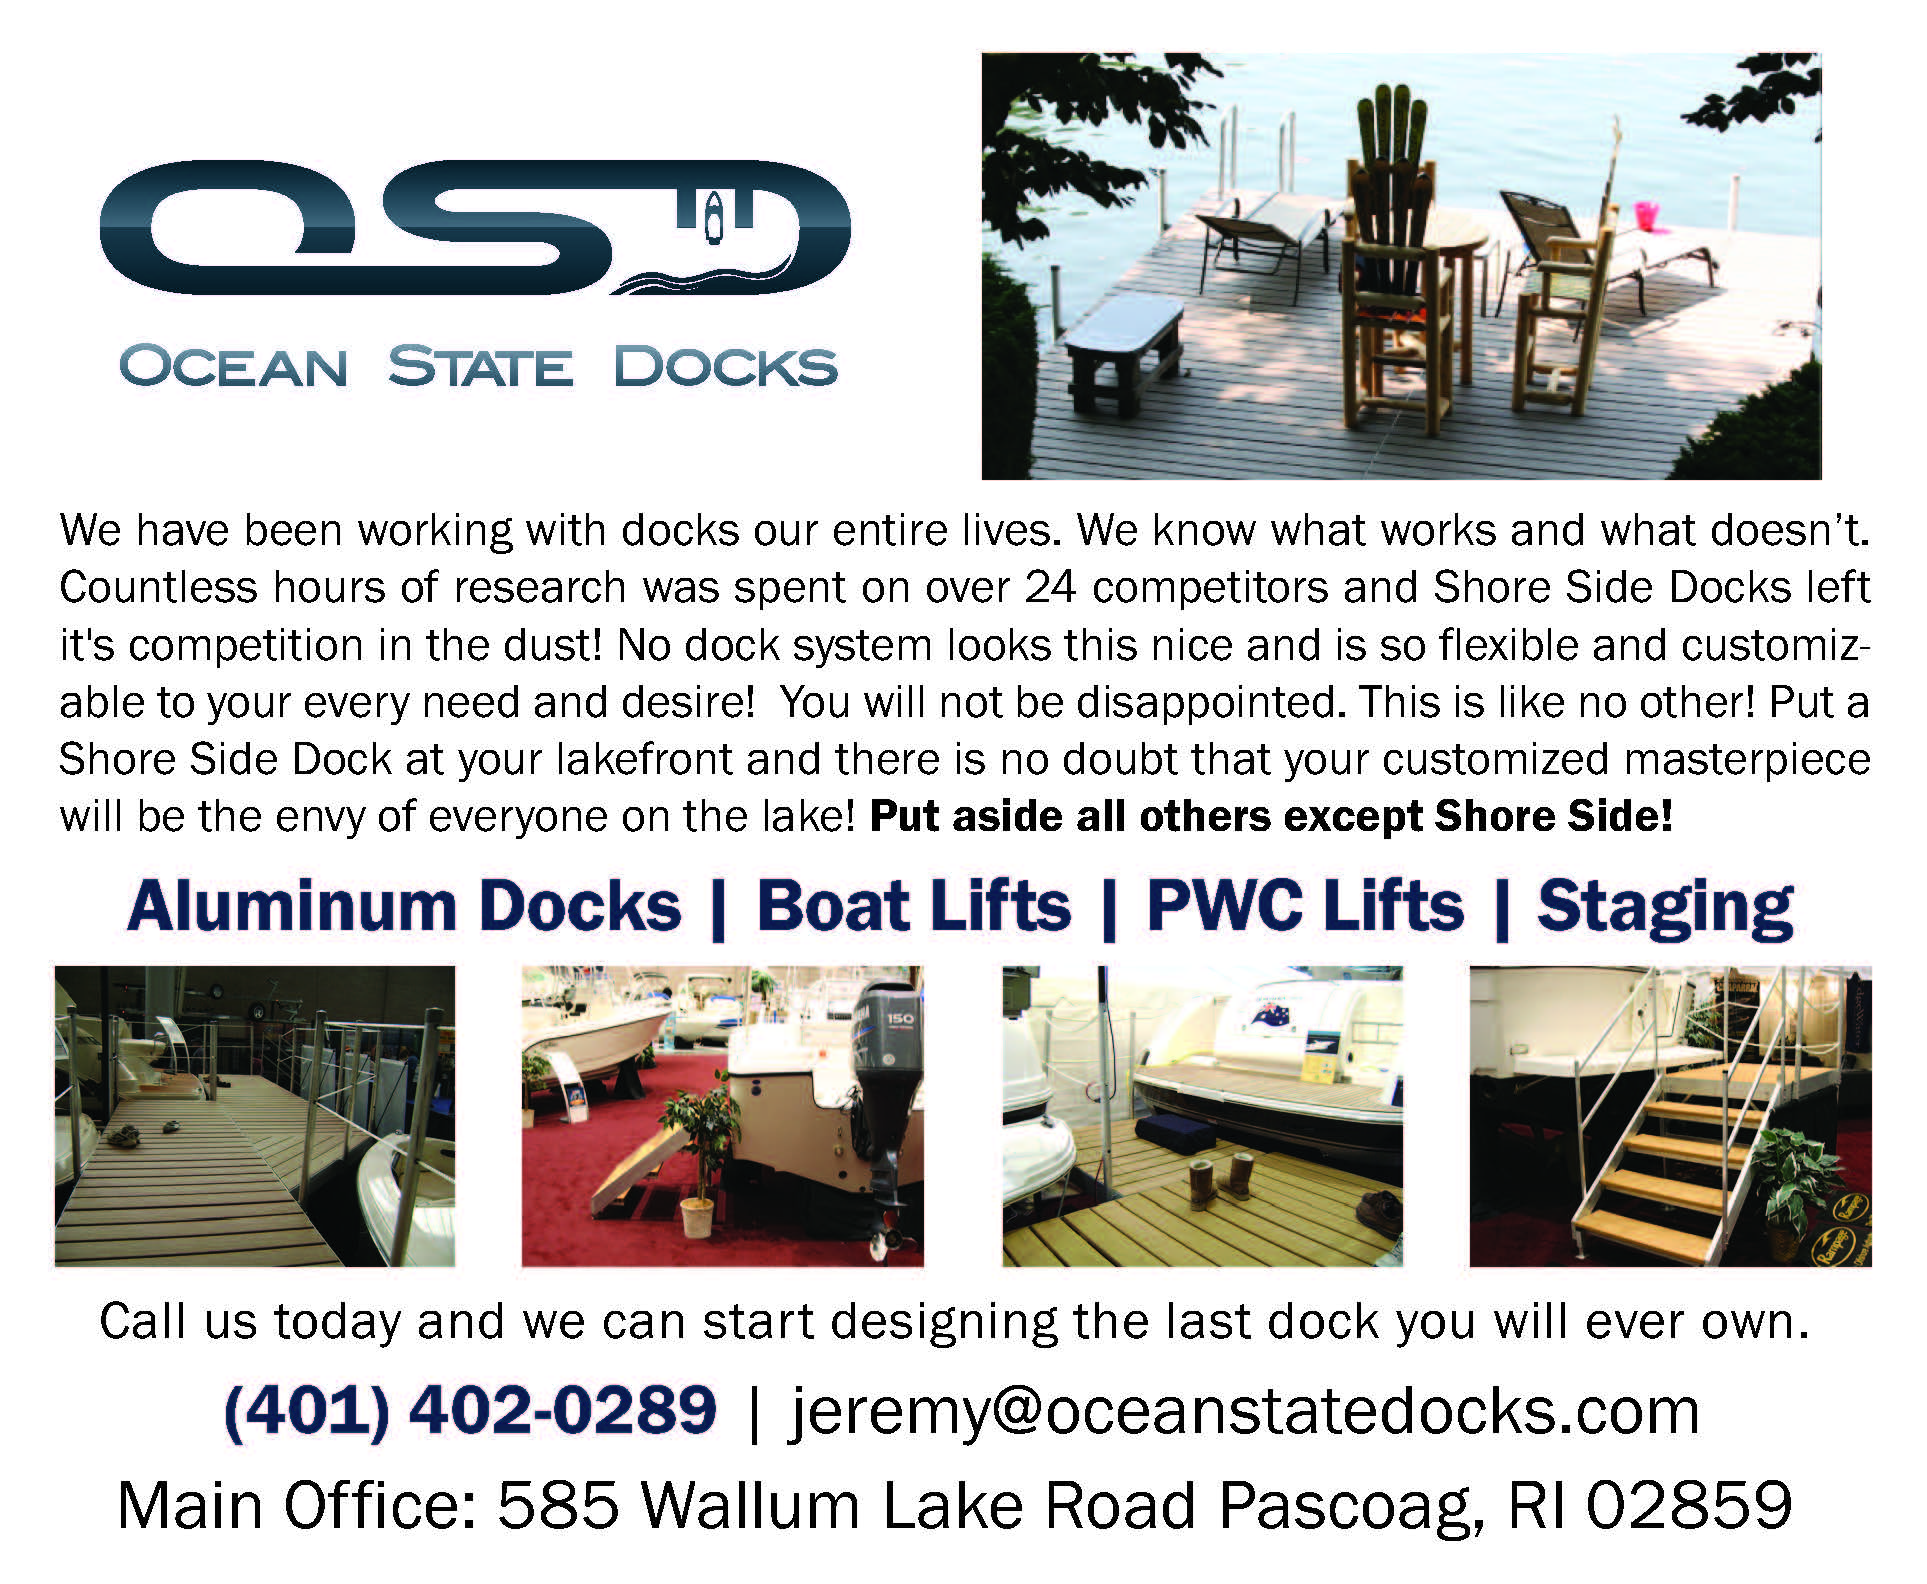 Ocean State Docks ad